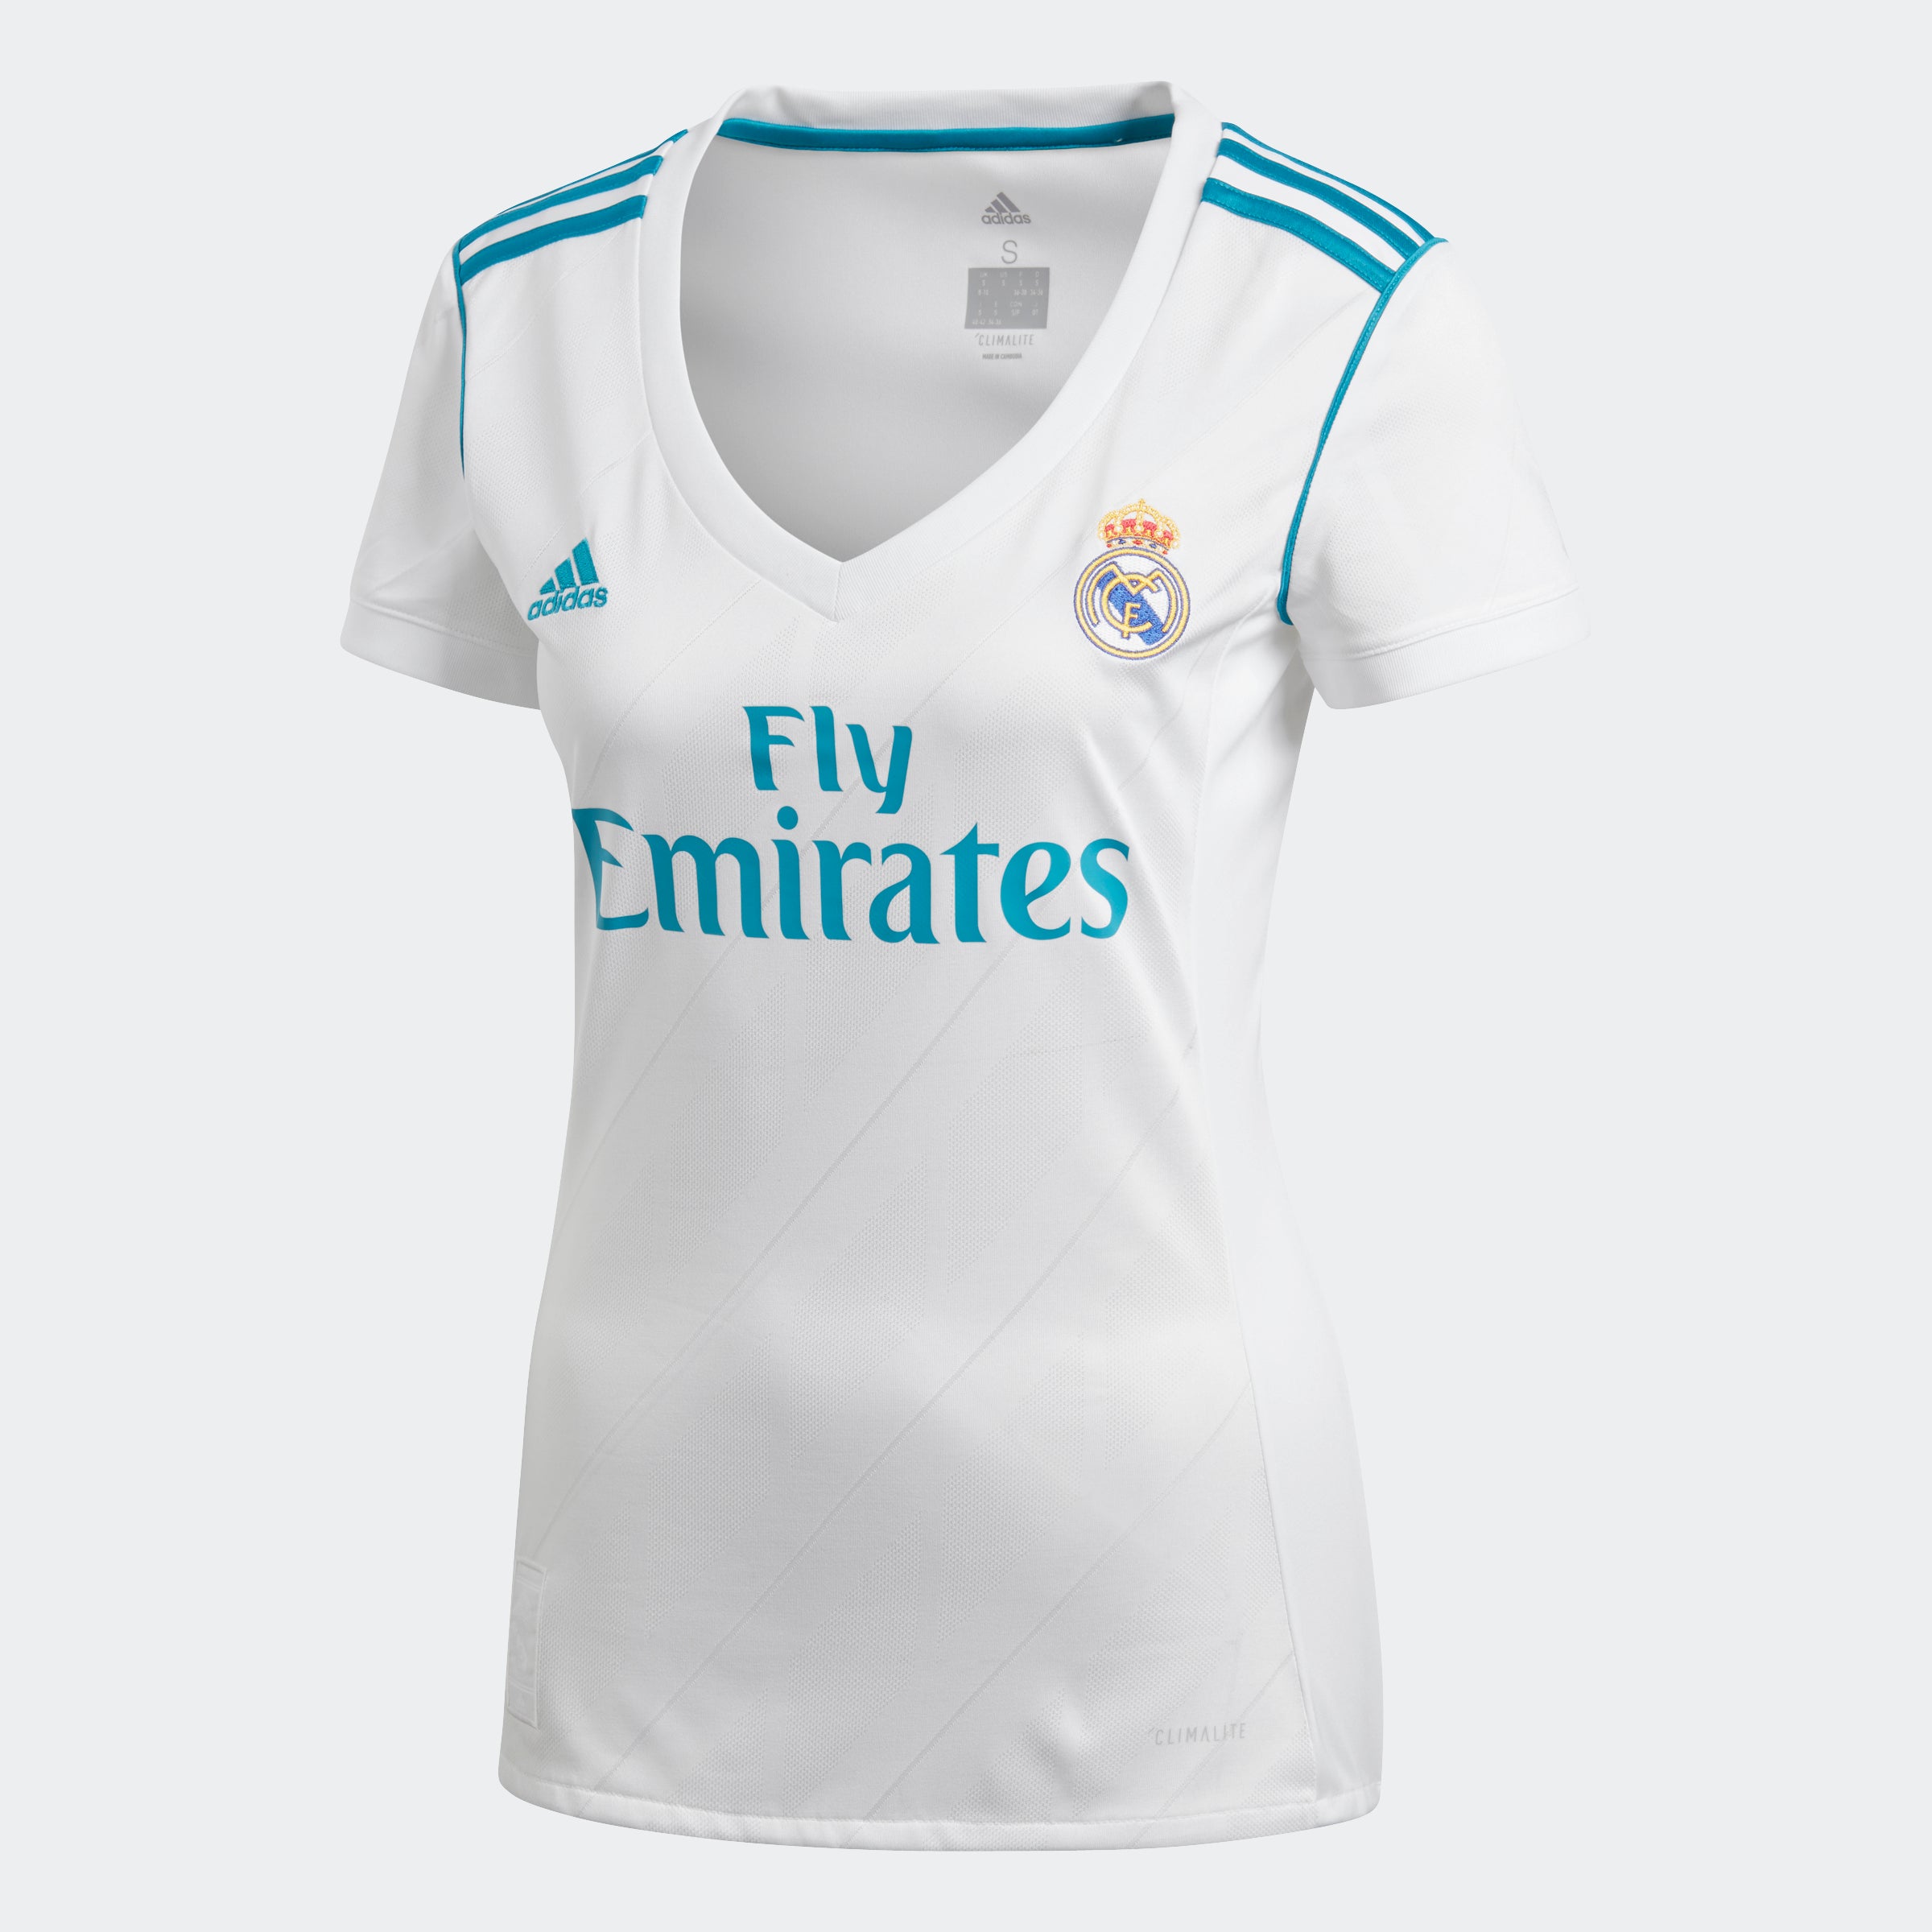 por otra parte, Berri negocio Women's Real Madrid Home Soccer Jersey 2017/18